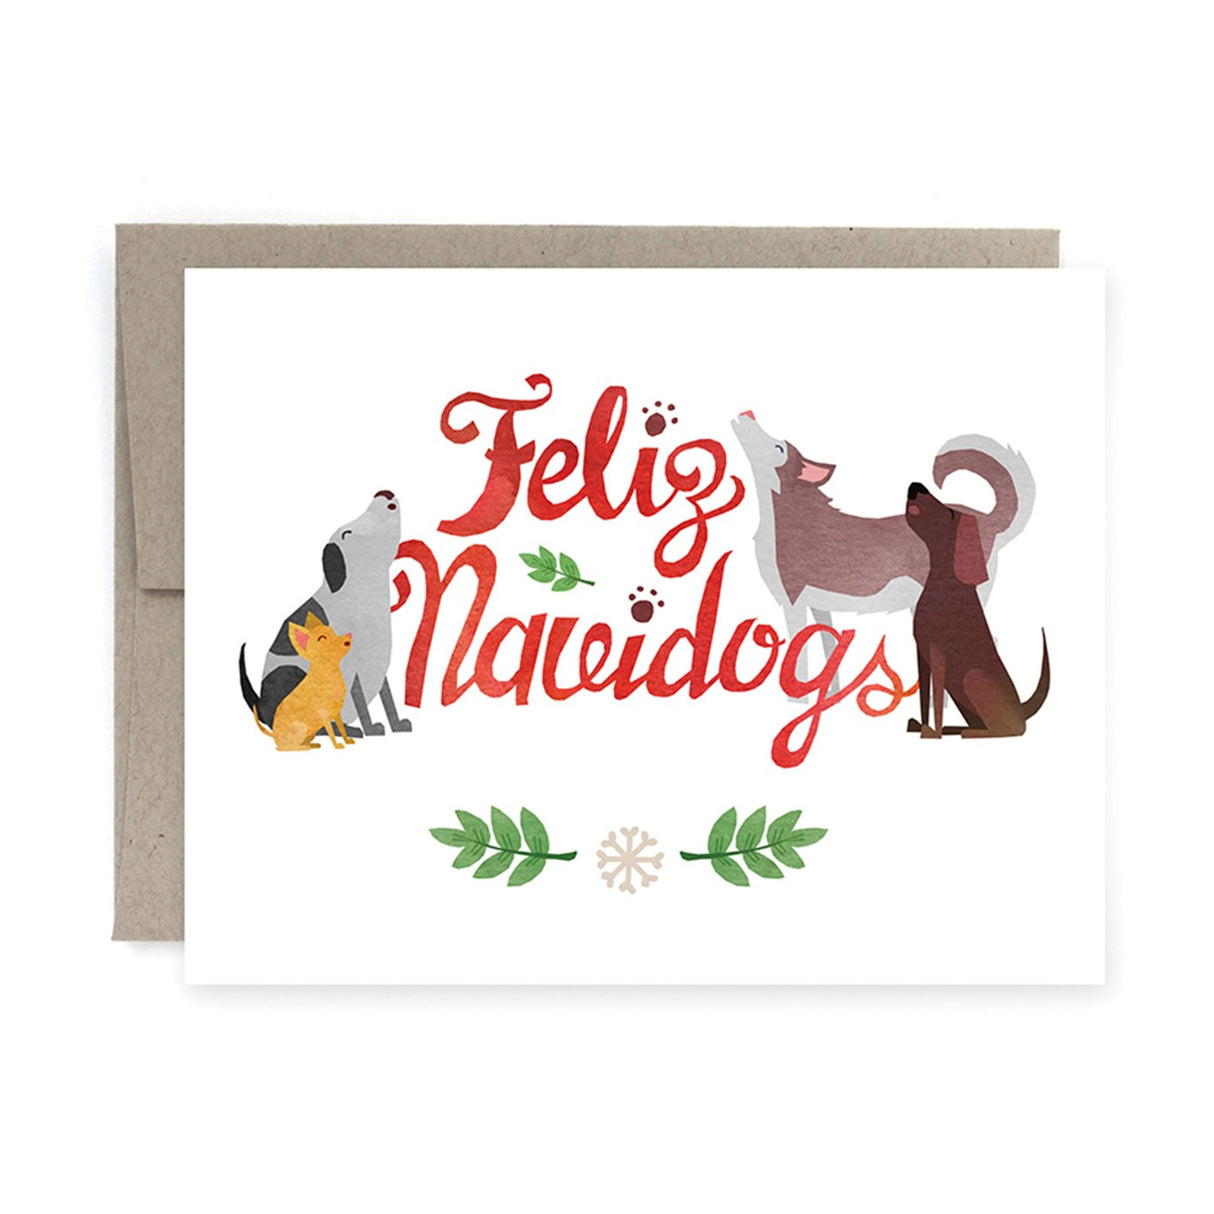 Art of Melodious Feliz Navidogs Holiday Greeting Card